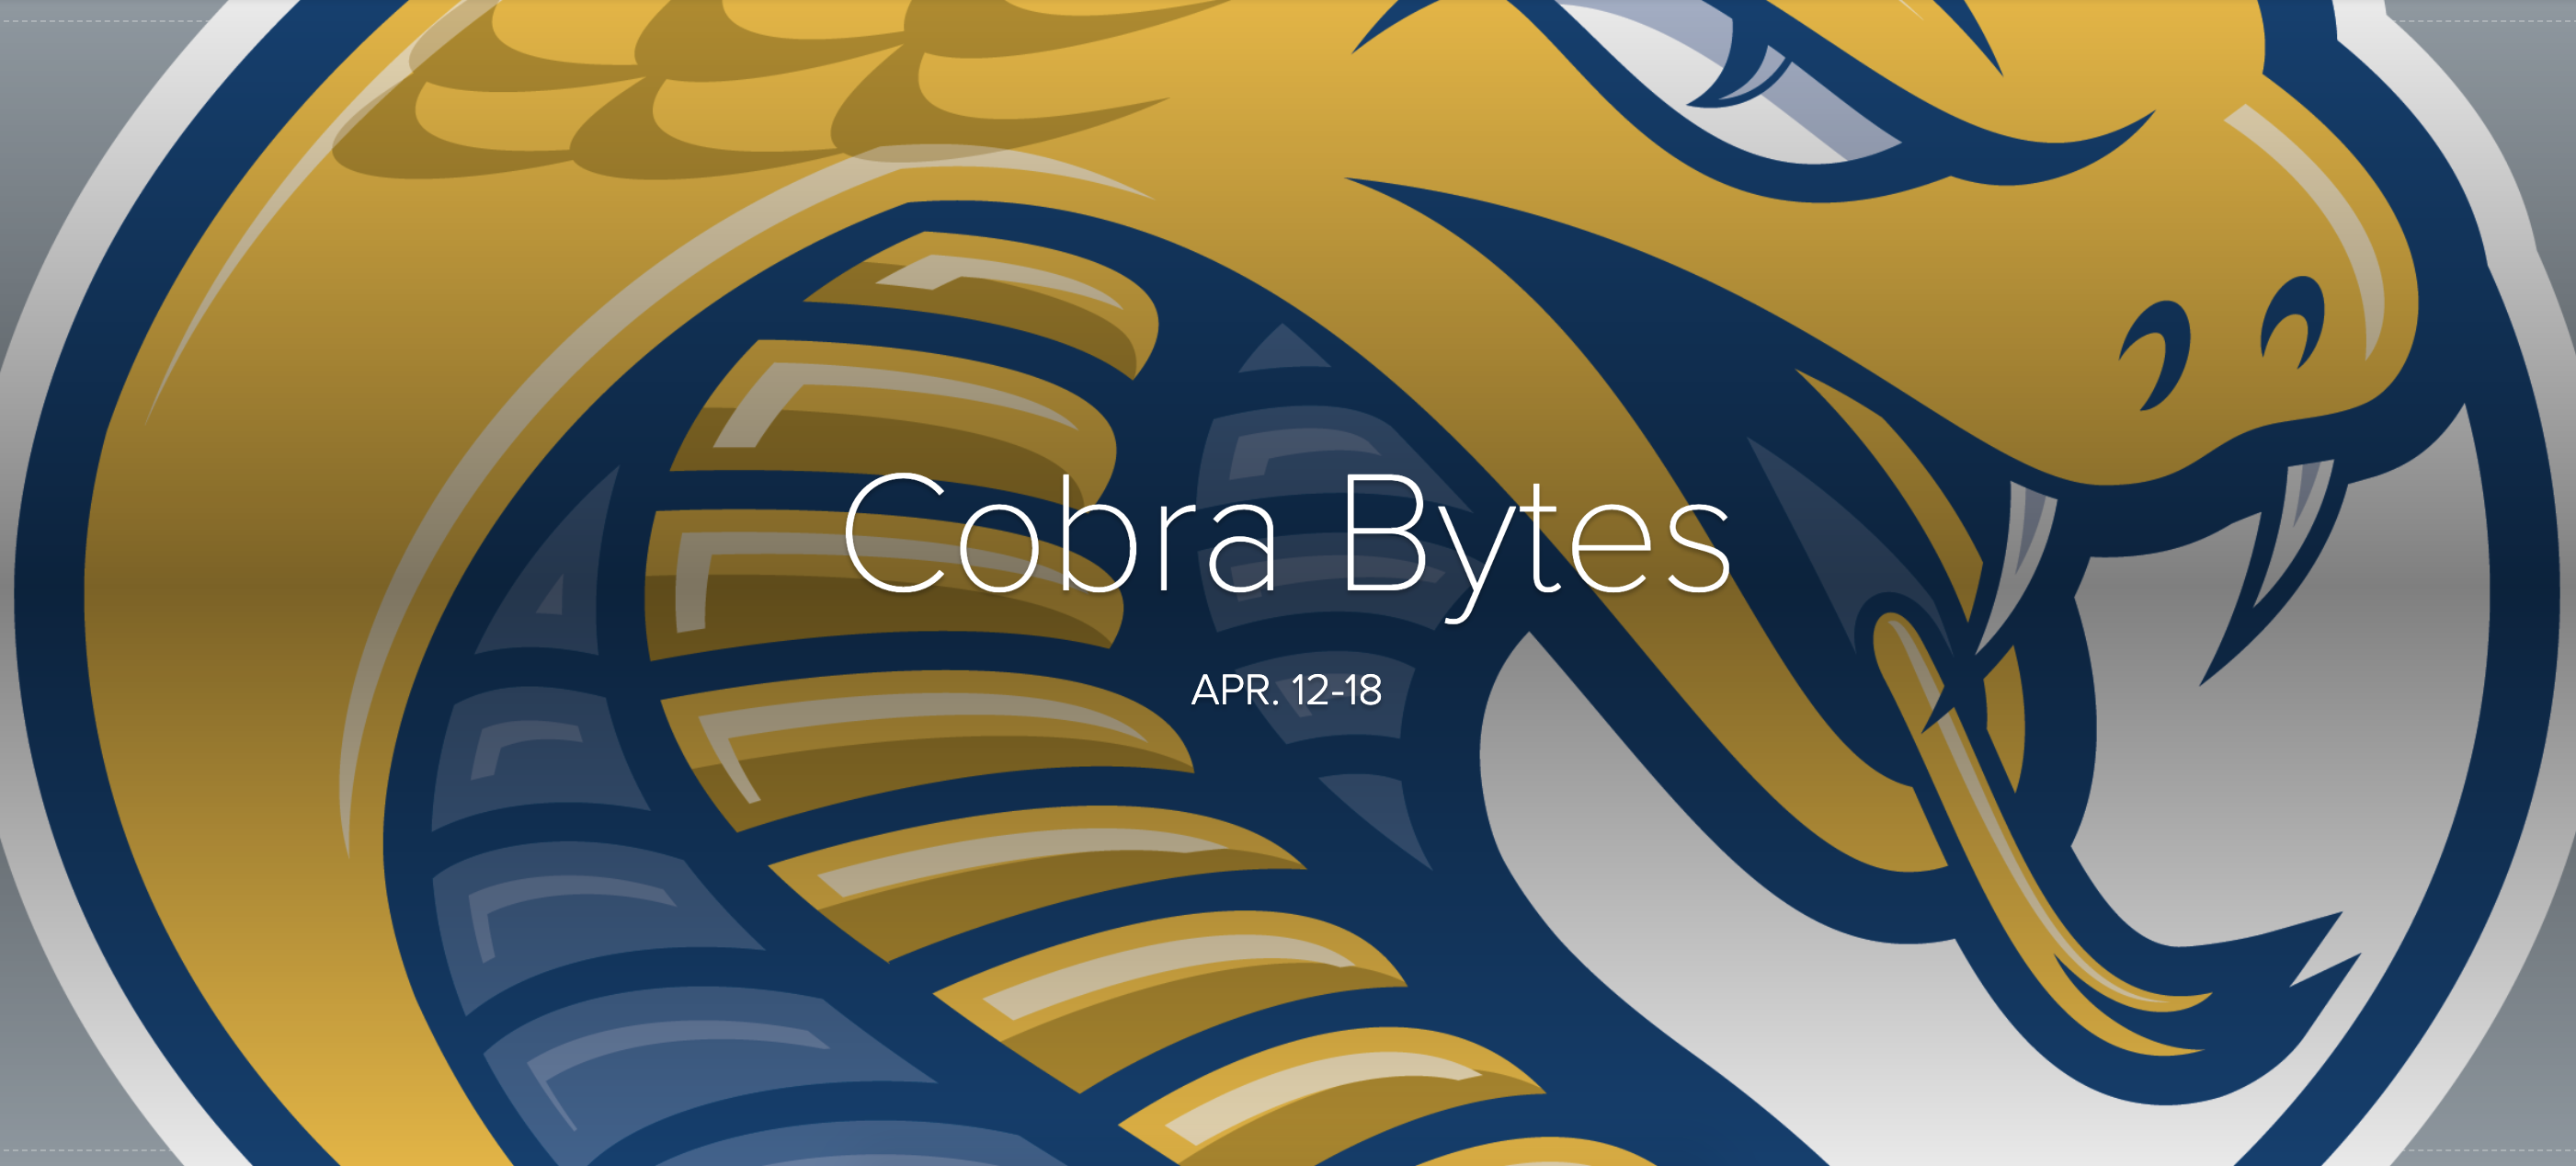 Cobra Bytes Apr. 12-18